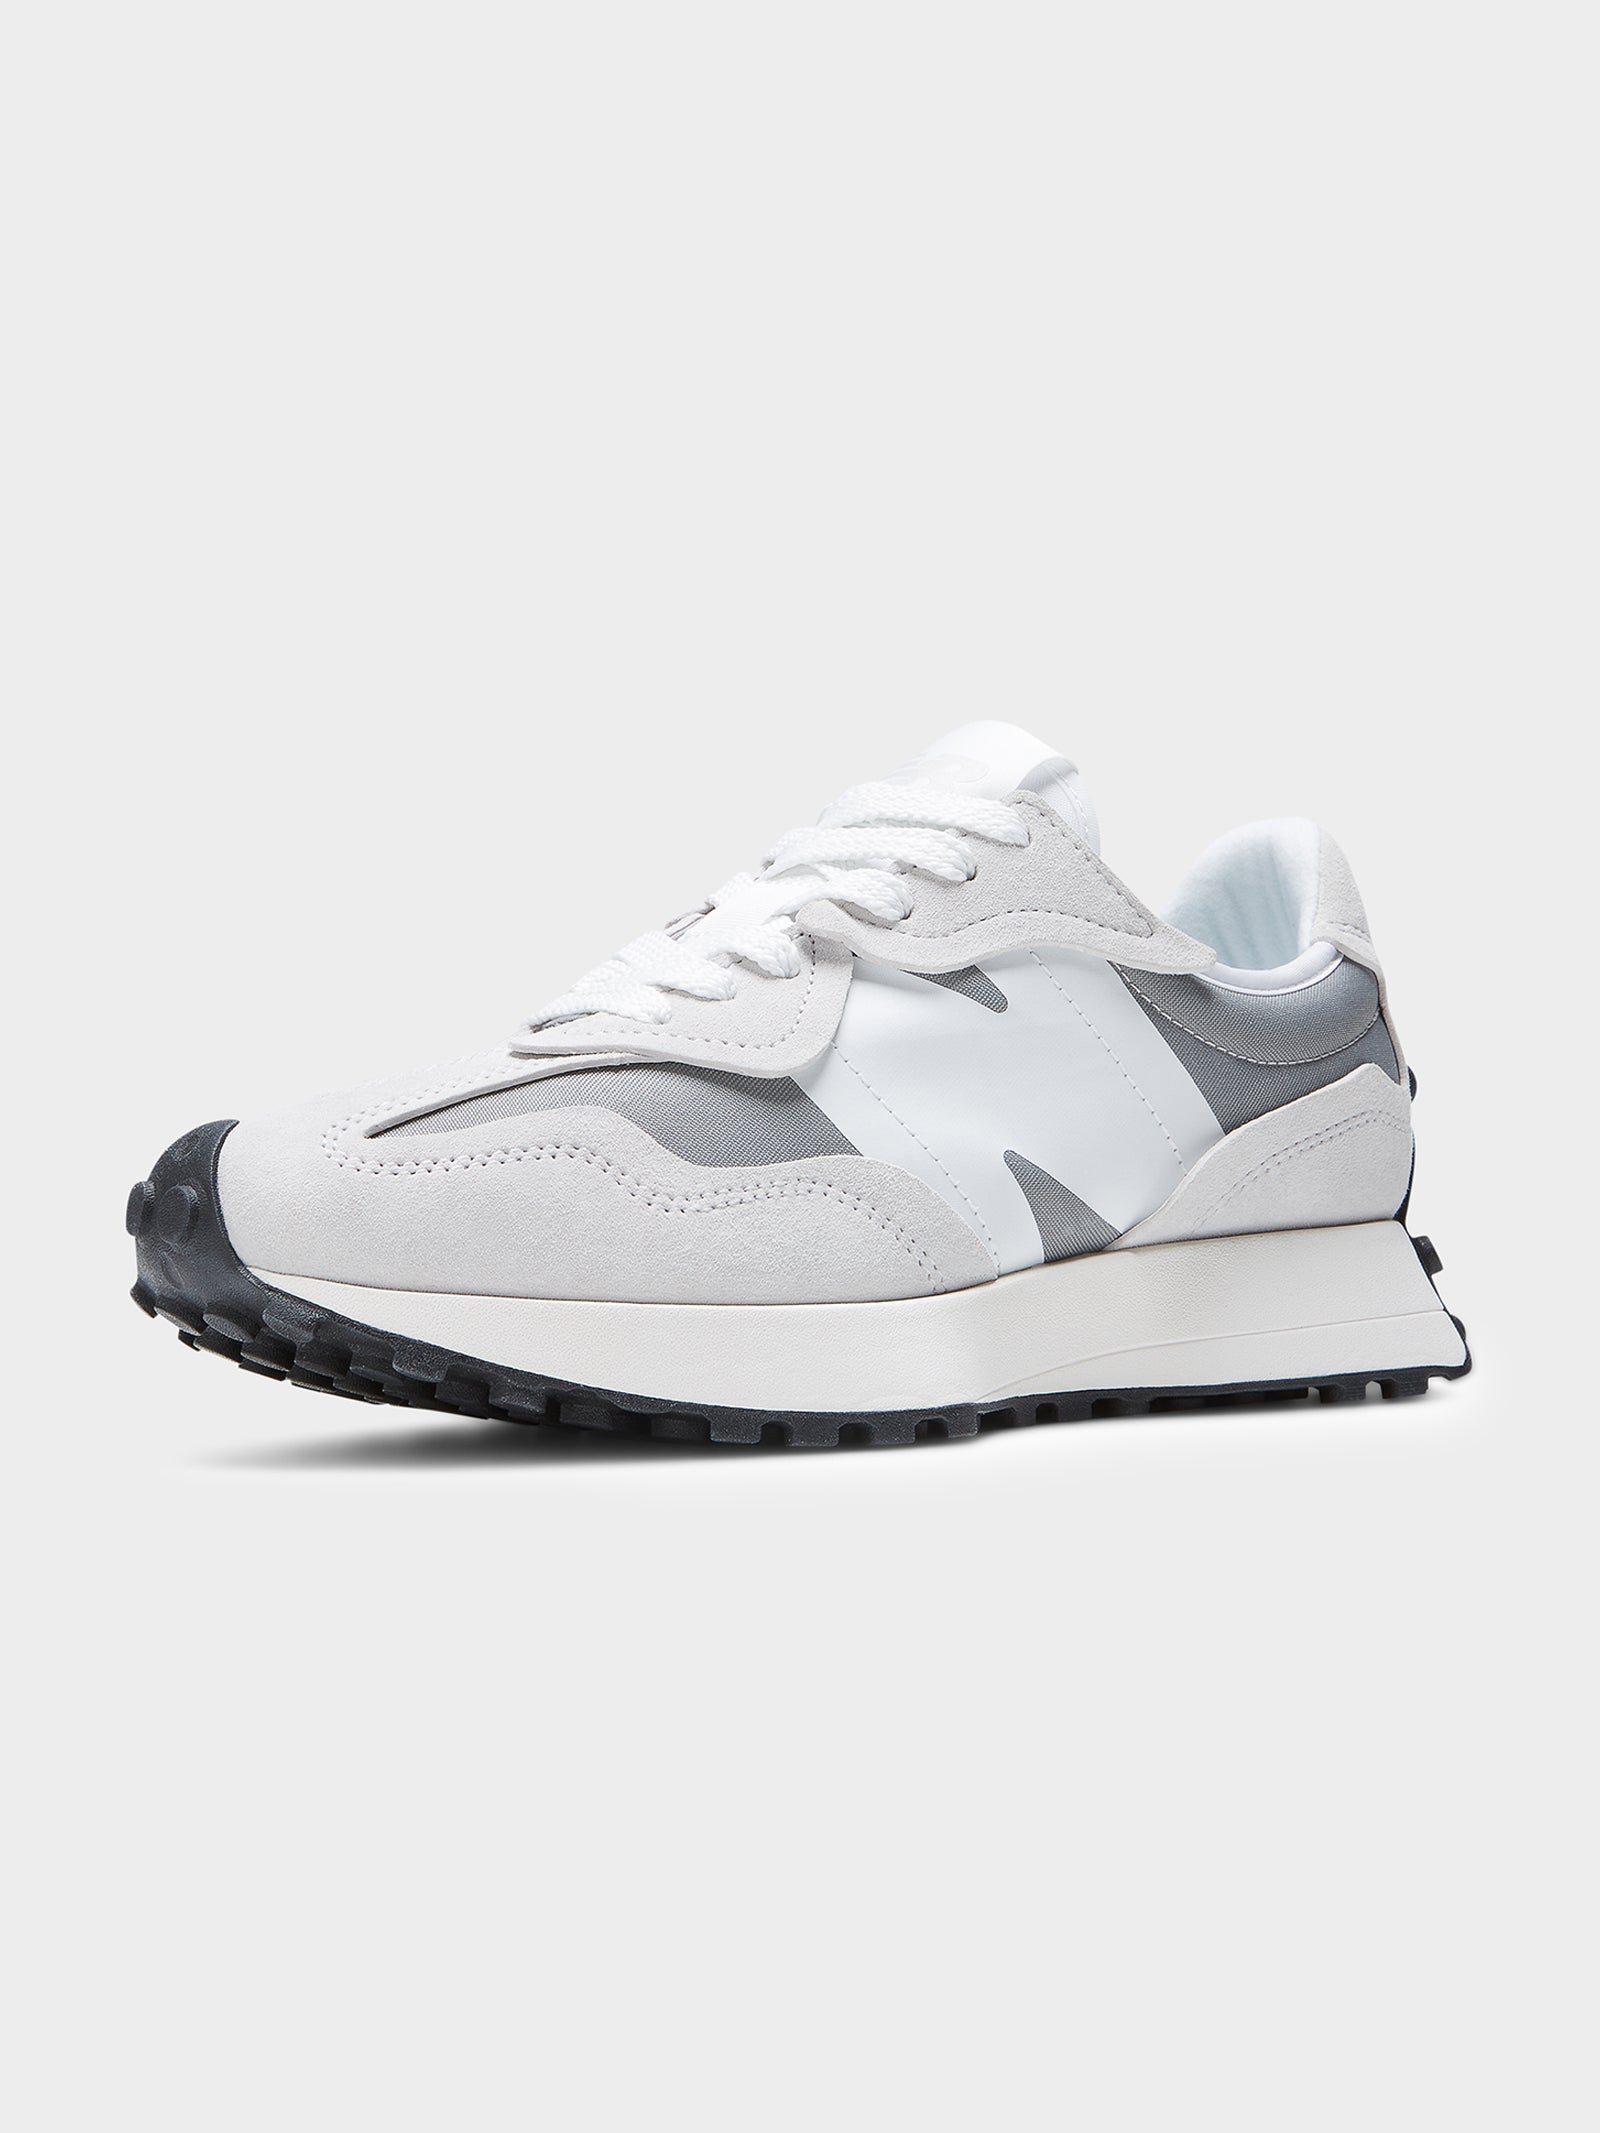 Unisex 327 Sneakers in White & Grey